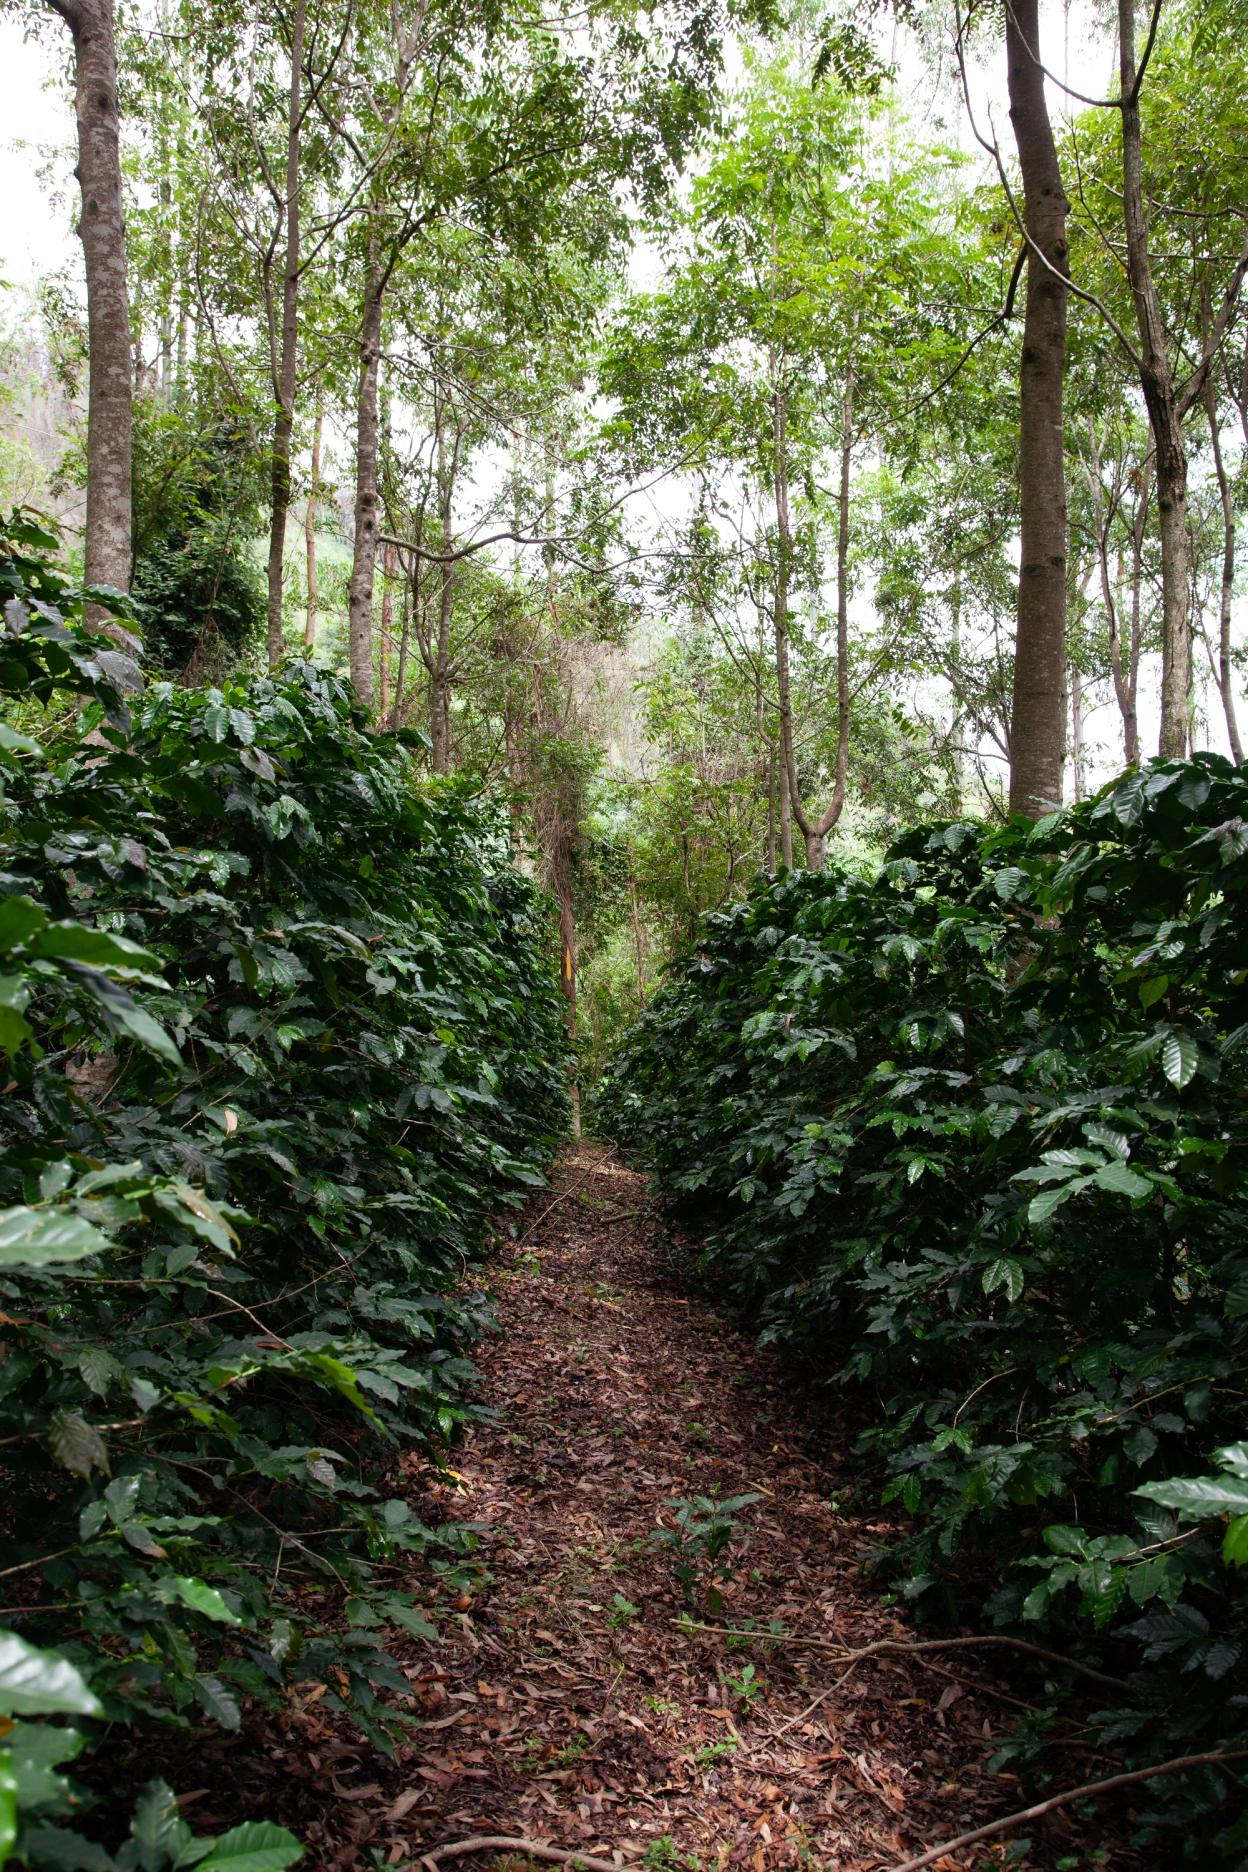 Coffee Plantation in the shade of Eucalyptus Threes